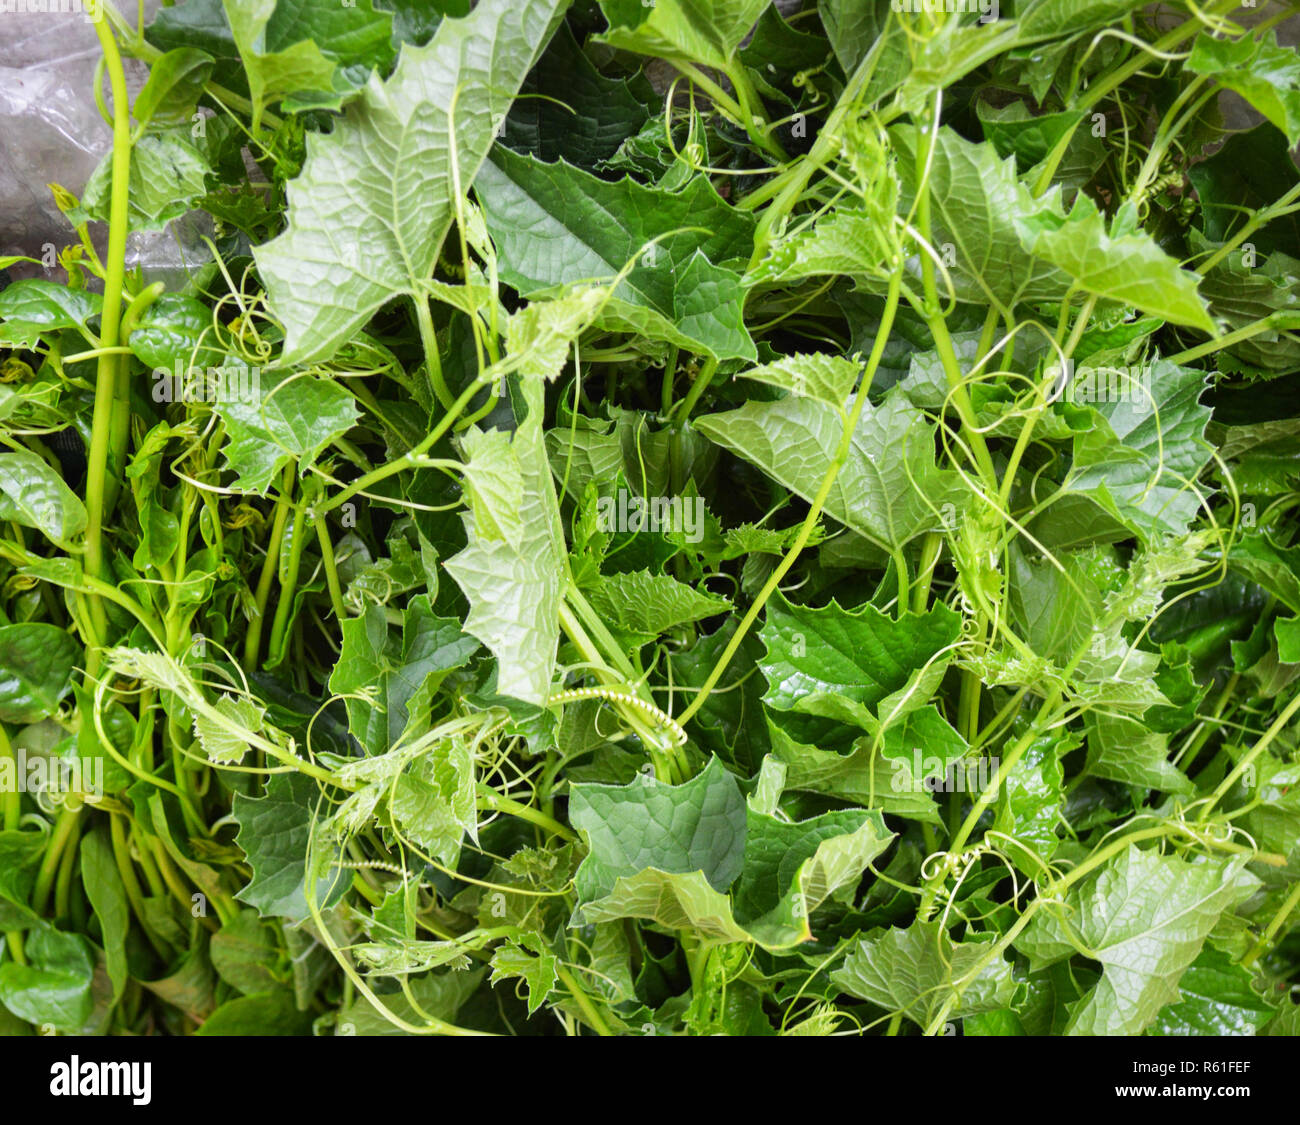 lvy gourd plant / green fresh lvy gourd vegetables background Stock Photo